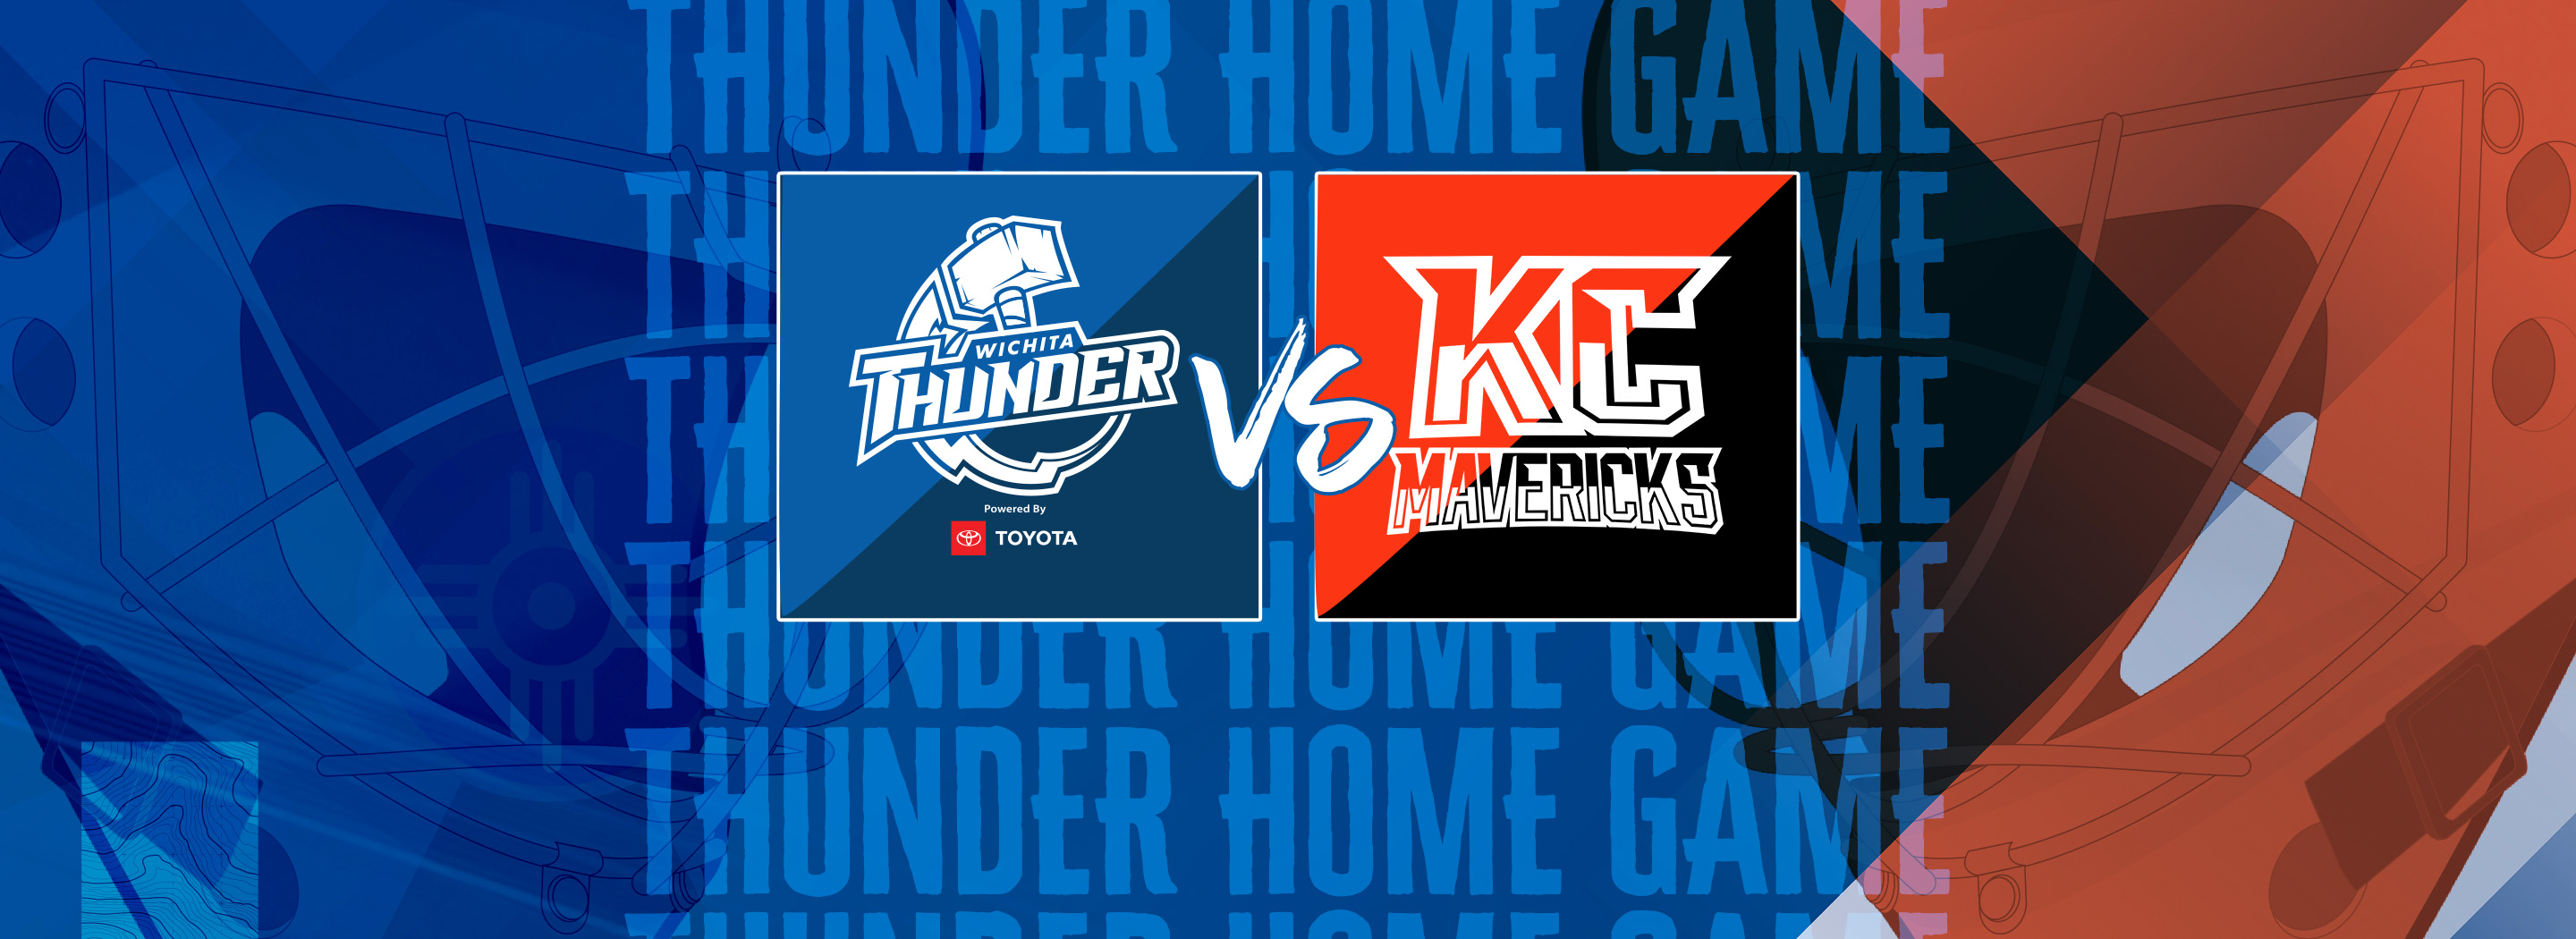 Thunder vs Kansas City at INTRUST Bank Arena - DEC 4